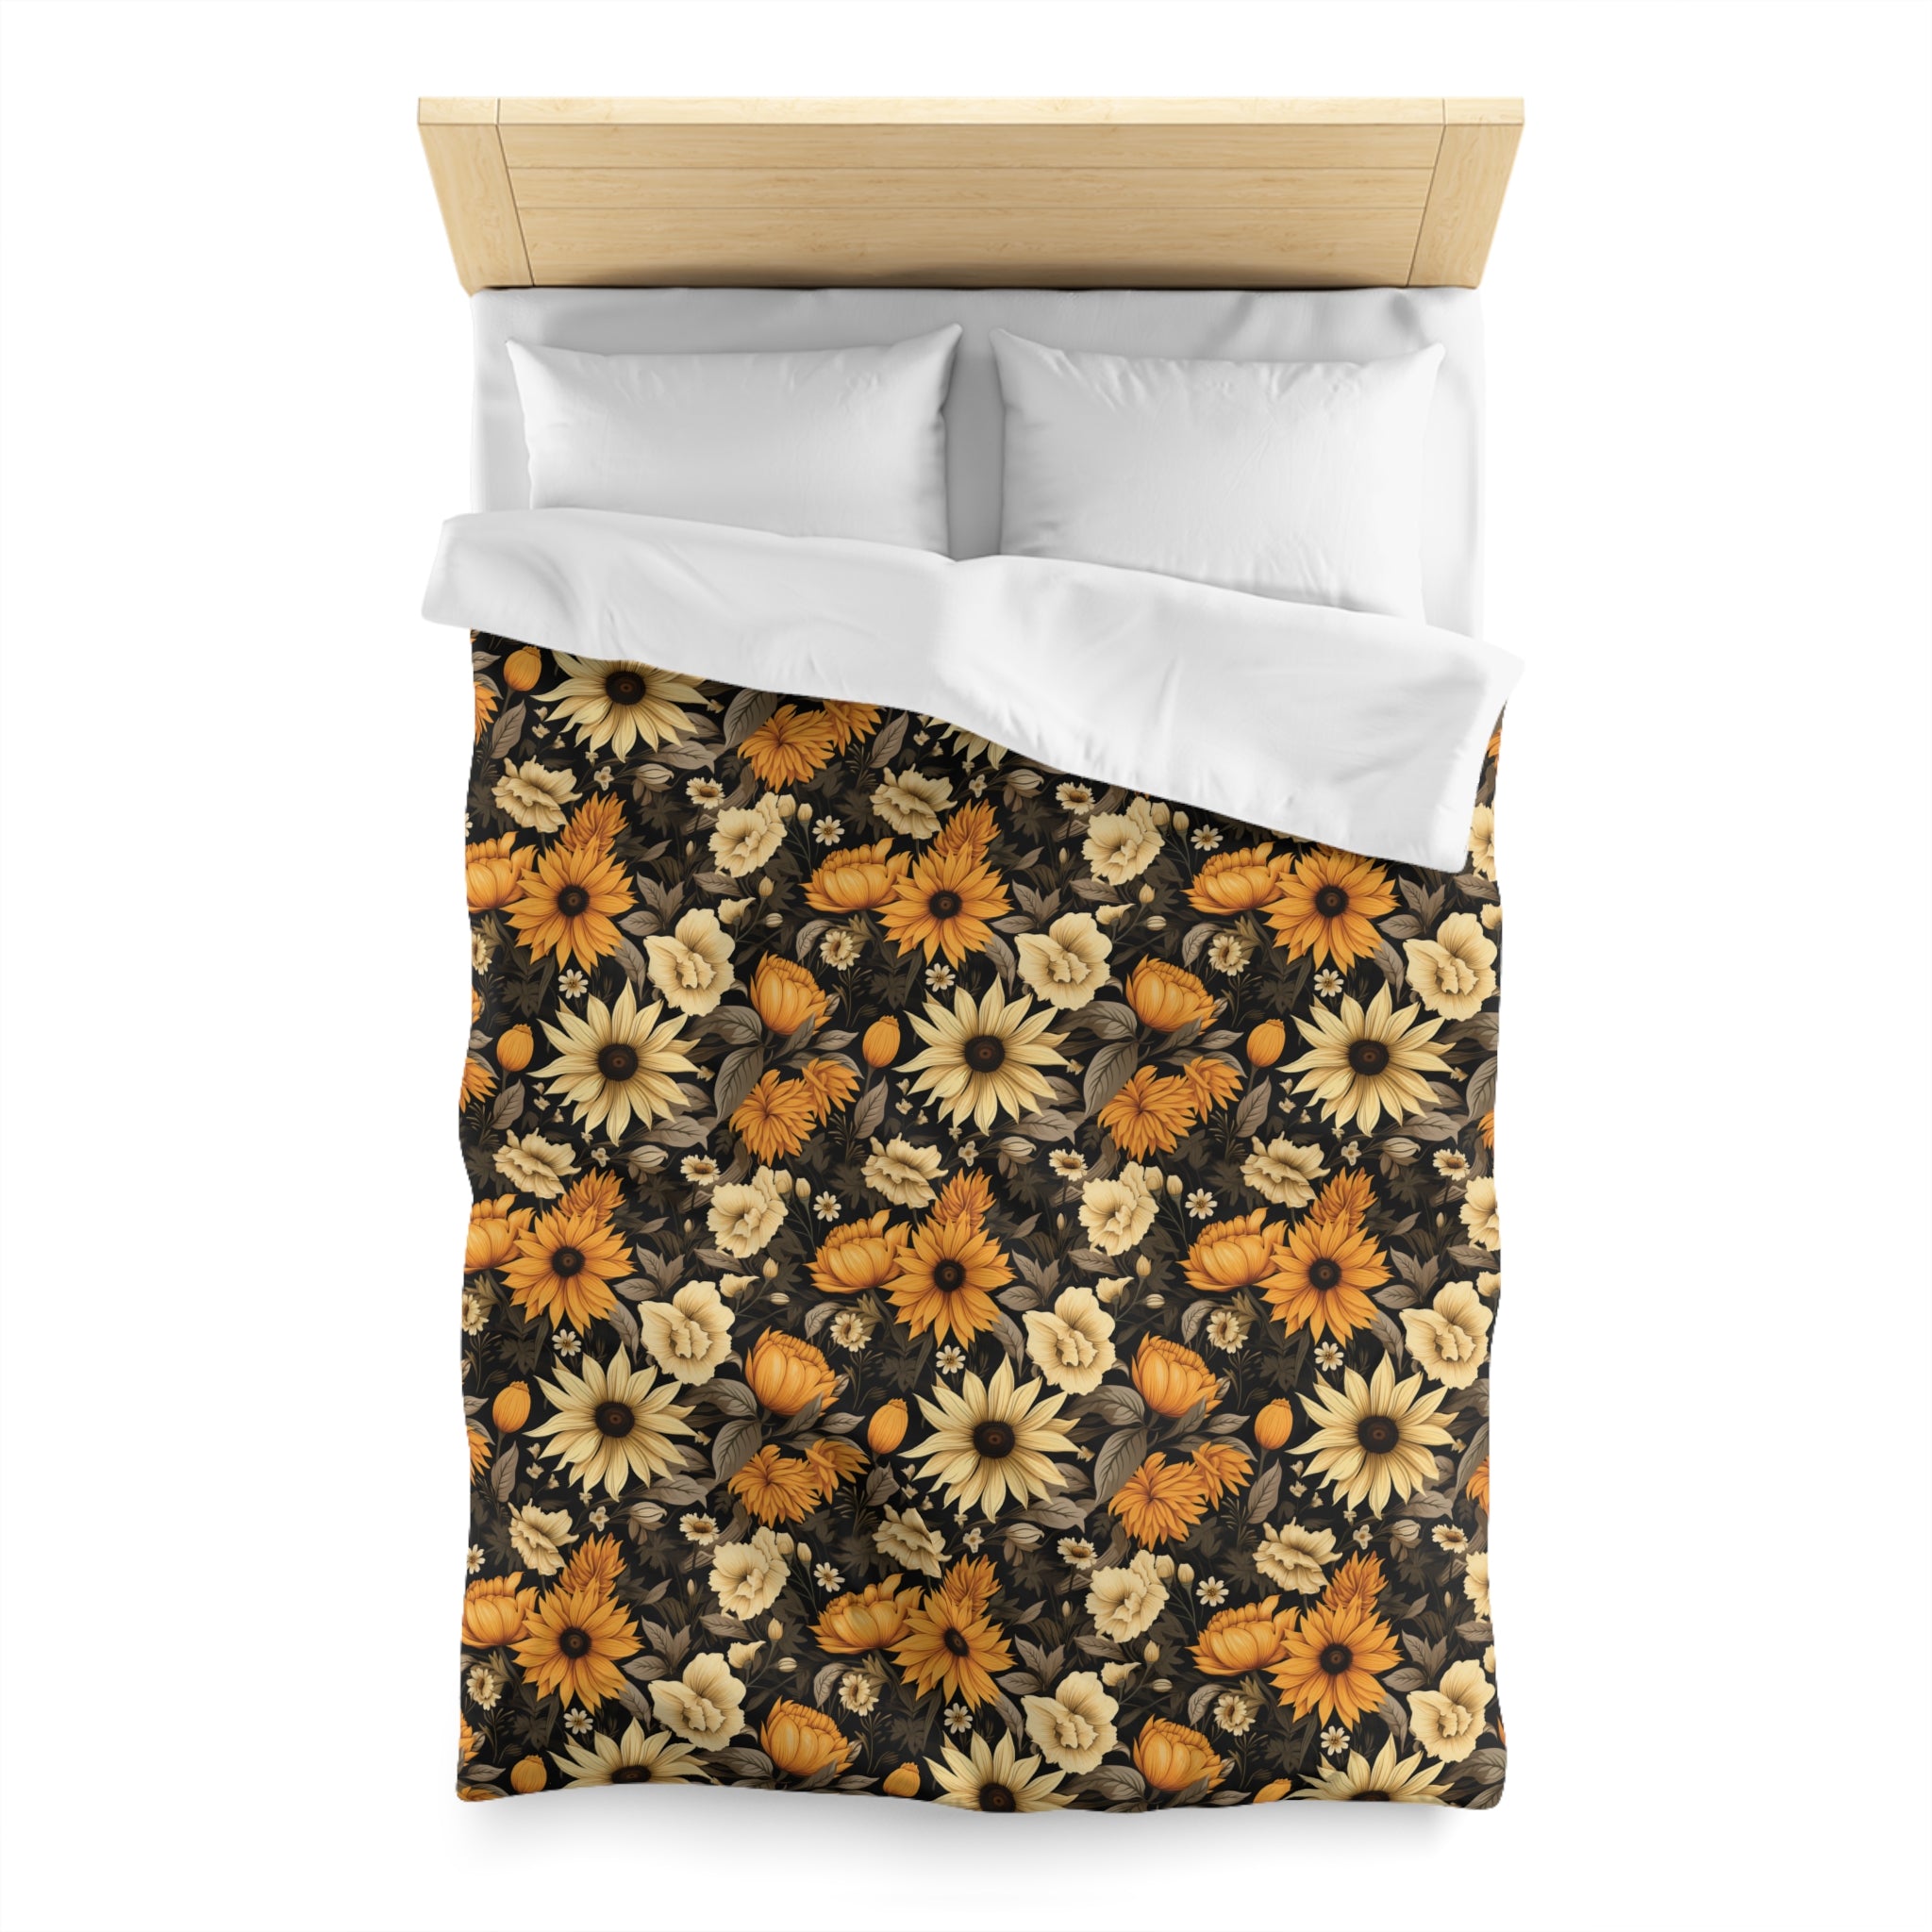 Forbidden Sunflower Microfiber Duvet Cover Set with Pillow Shams